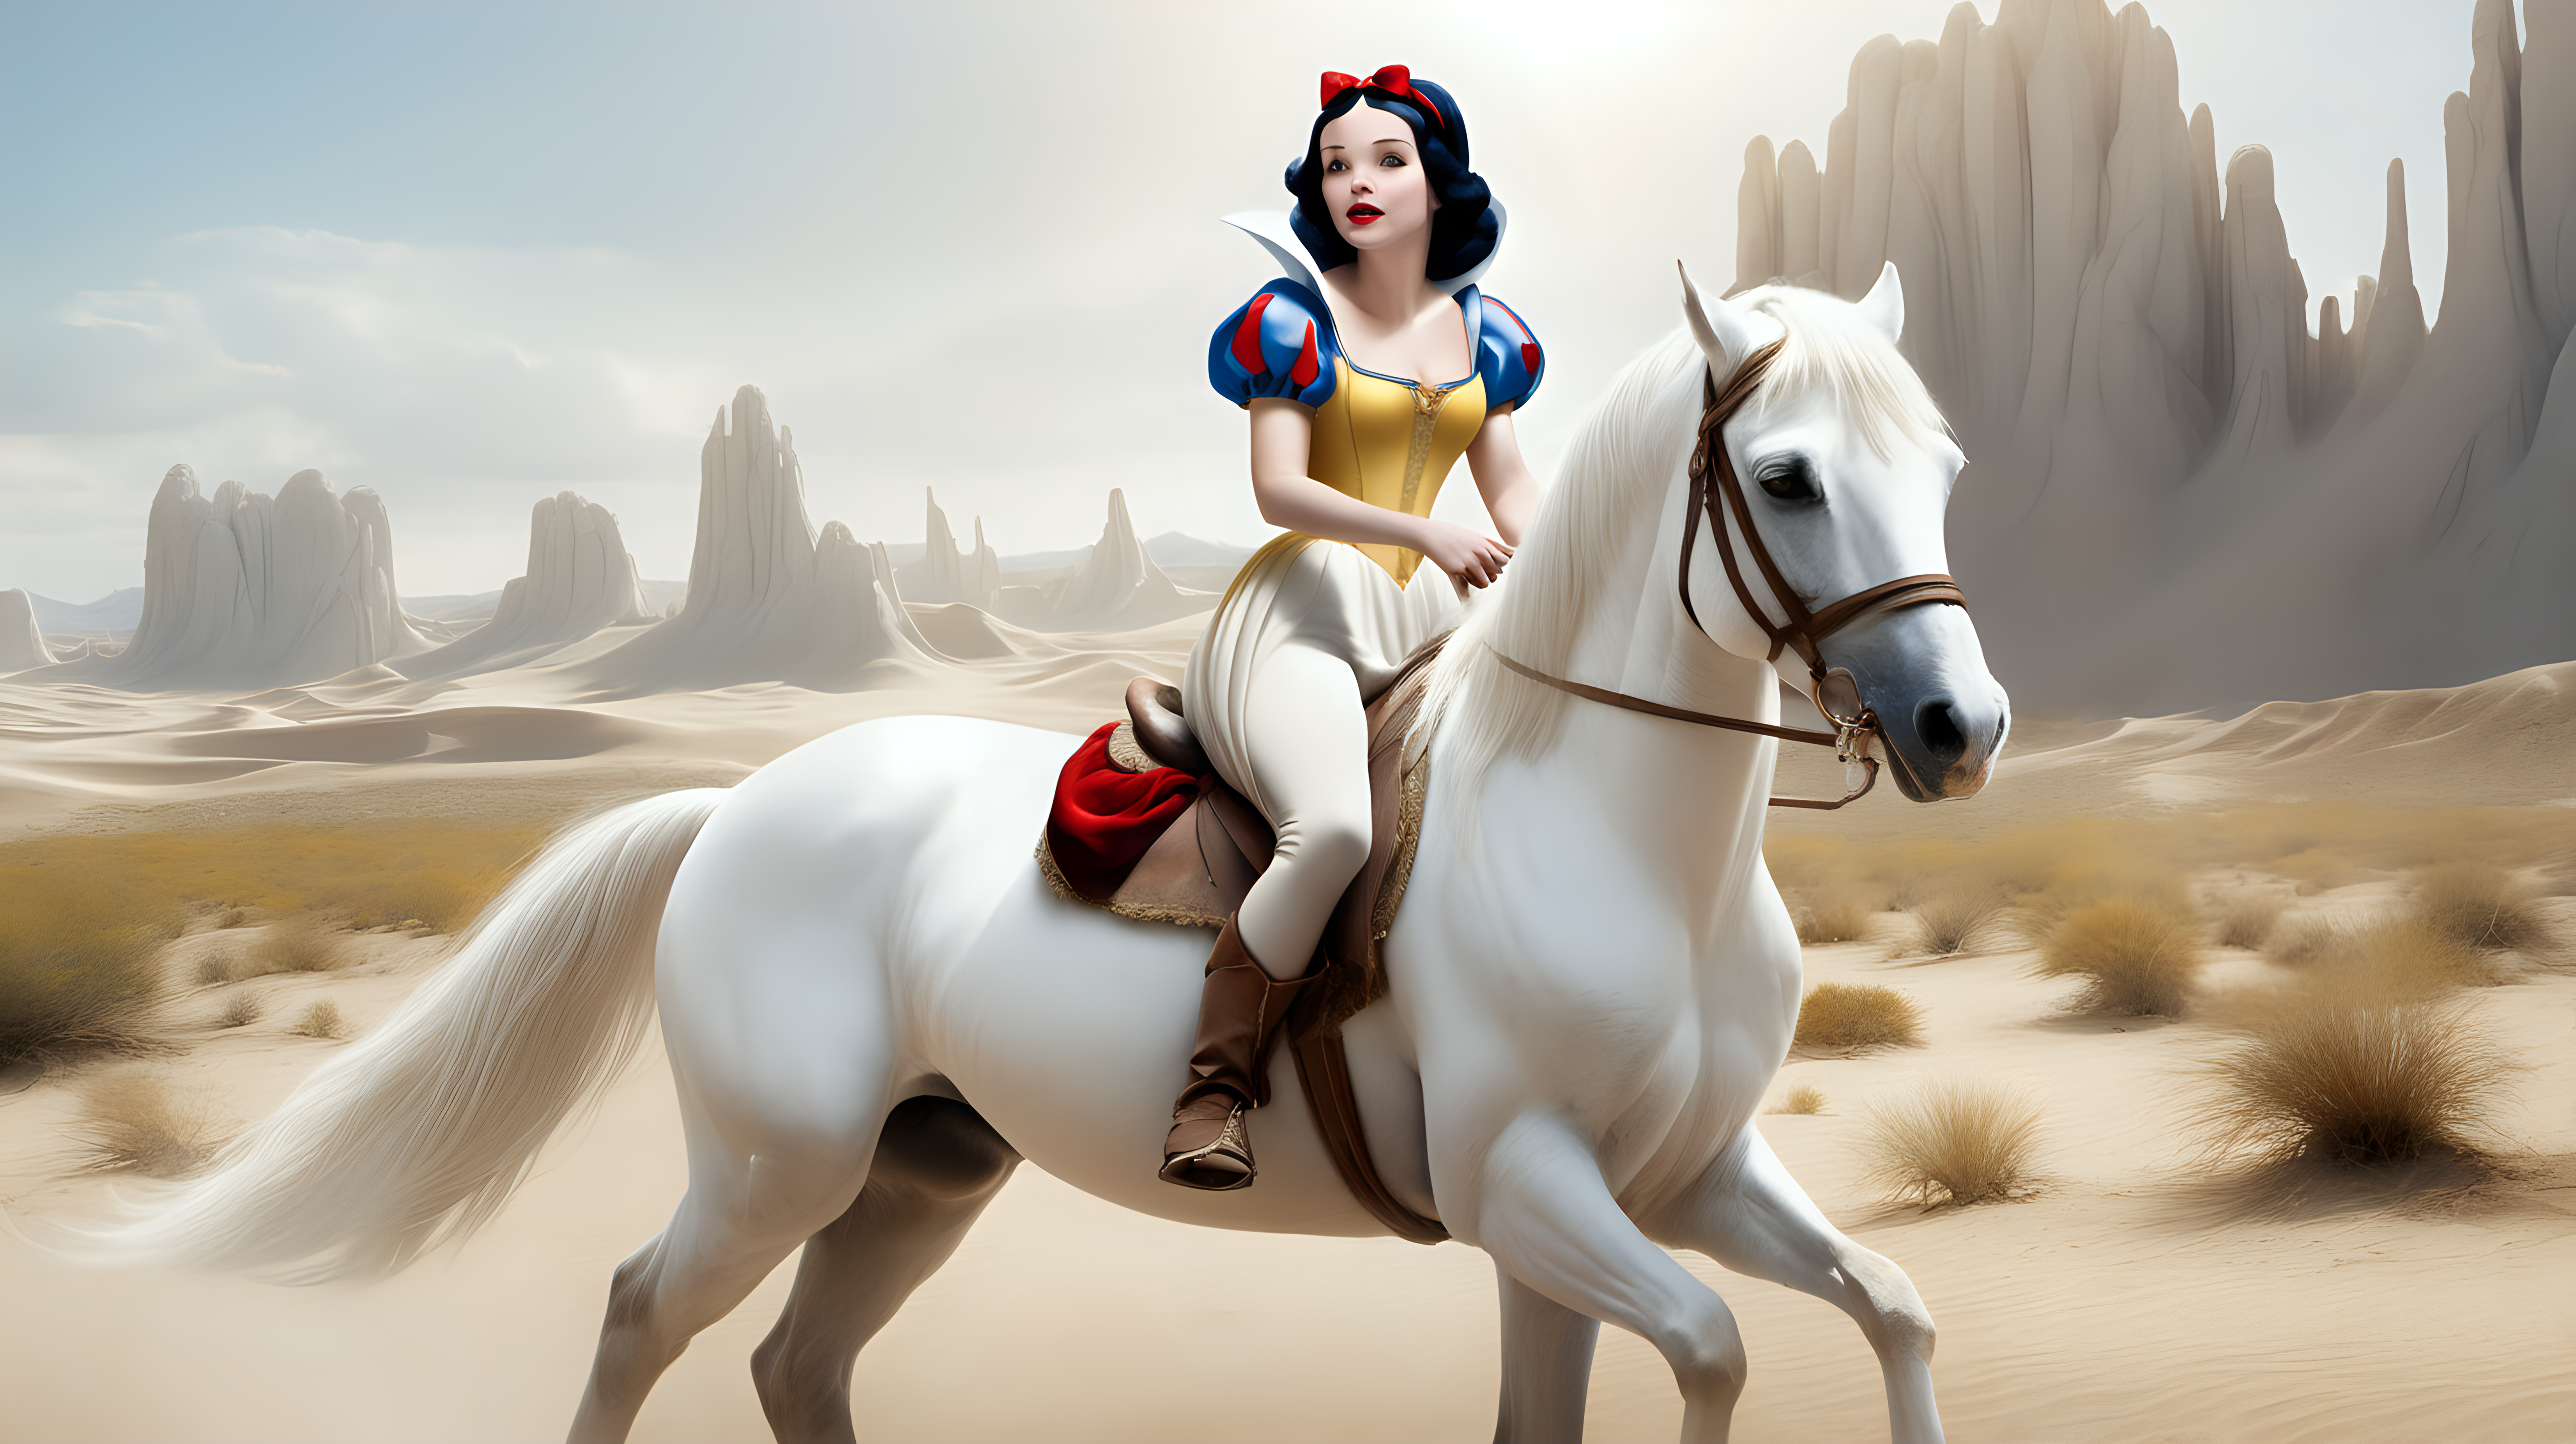 Snow White riding a white horse in the desert